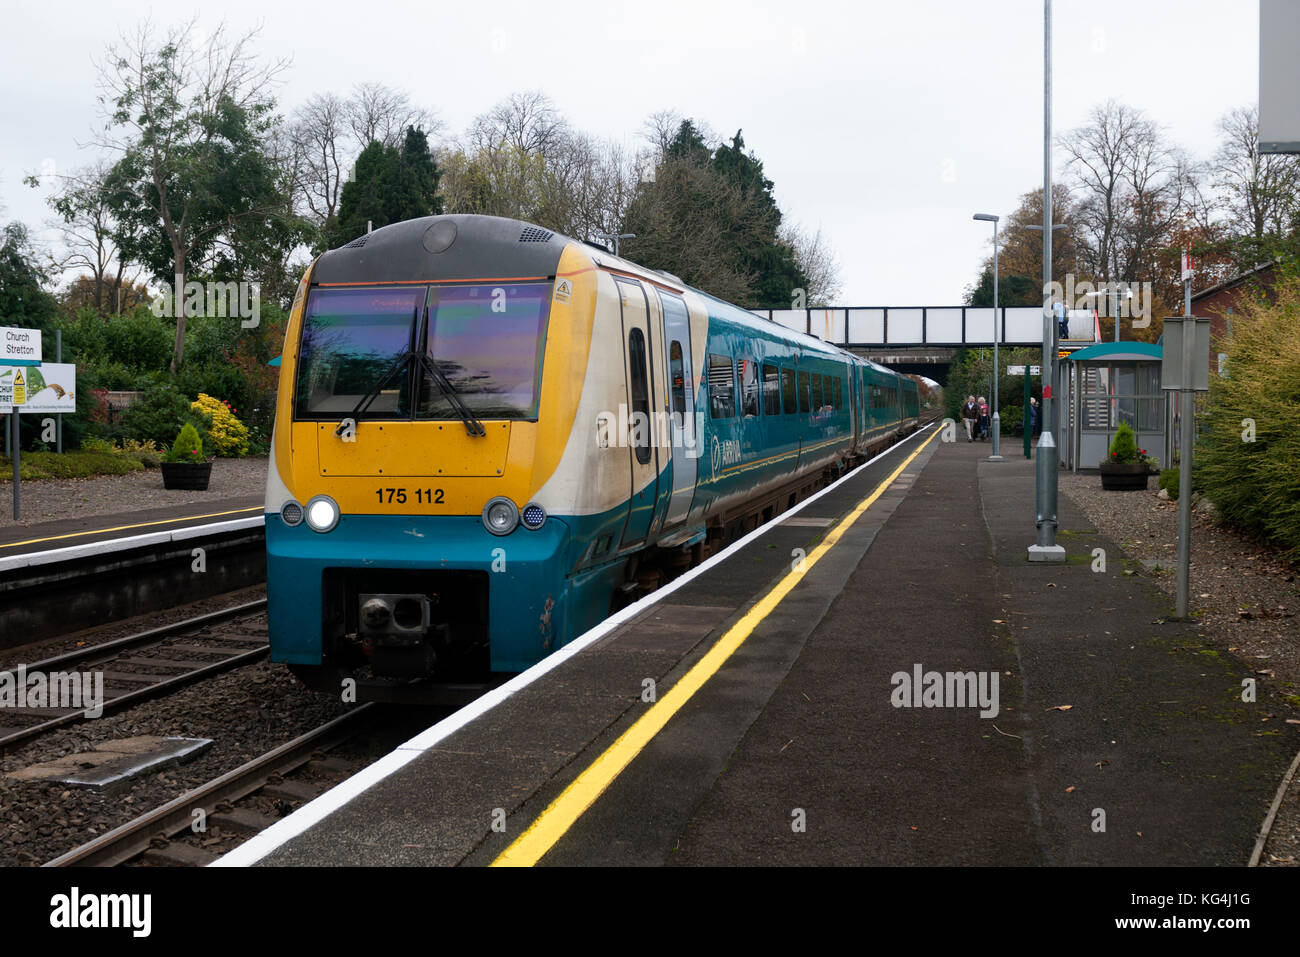 An Arriva Trains Wales class 175 diesel train at Church Stretton station, Shropshire, England, UK Stock Photo